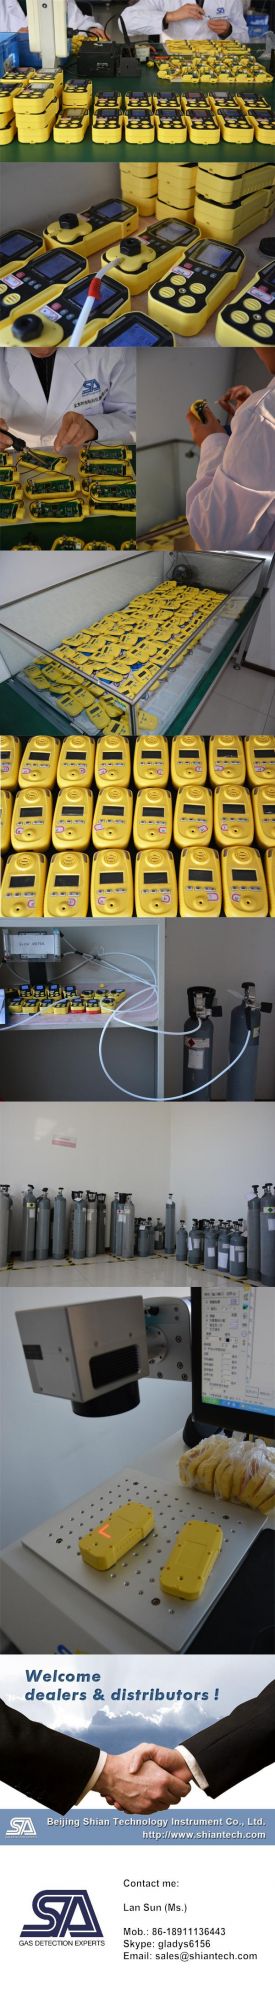 School Office CO2 Ventilation Controller for CO2 Temp Rh